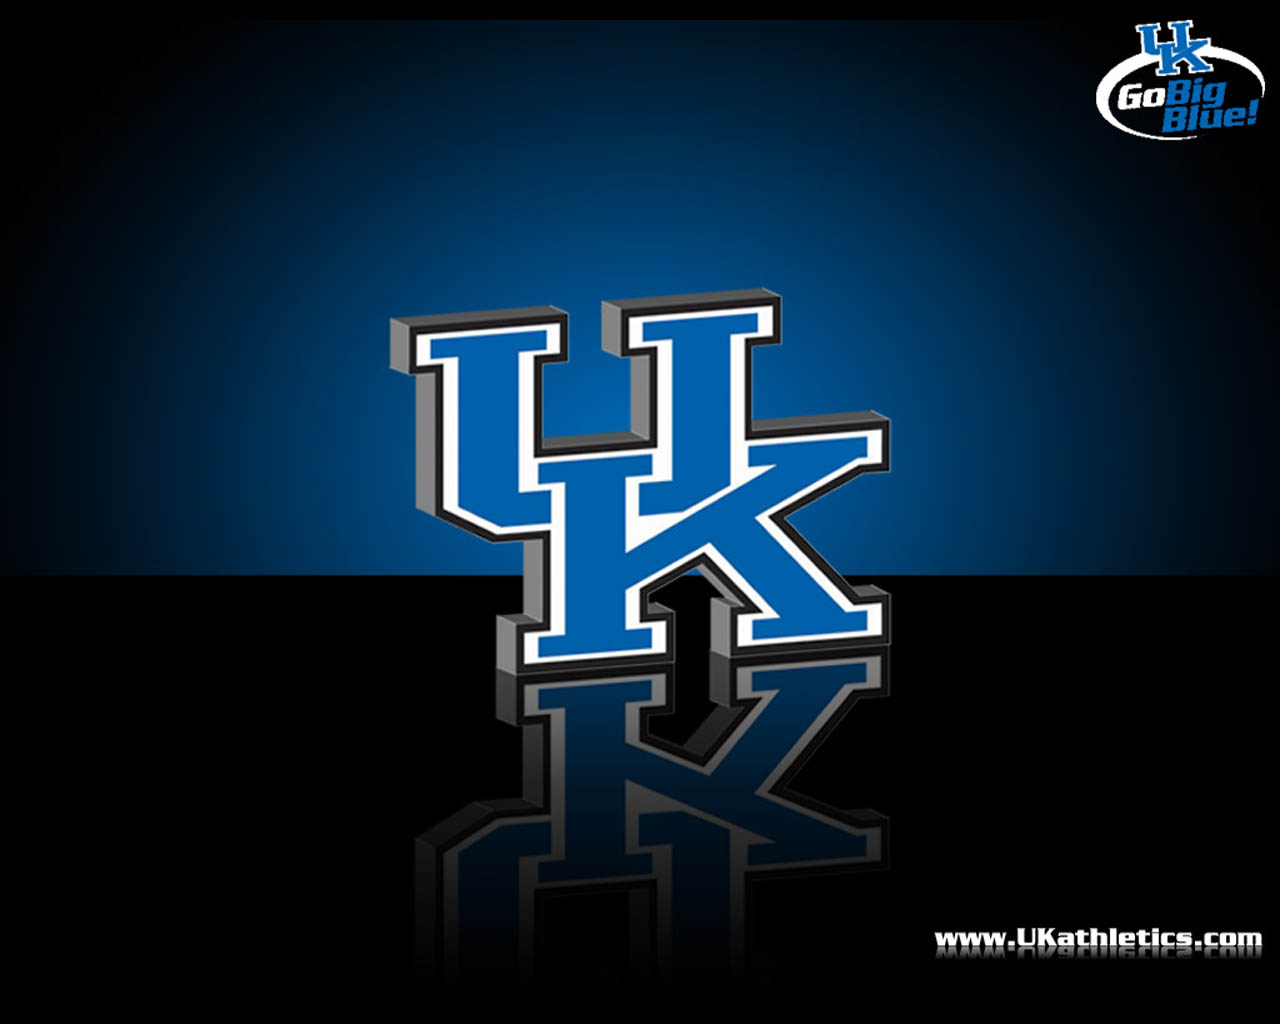 Kentucky Wildcats Large Image